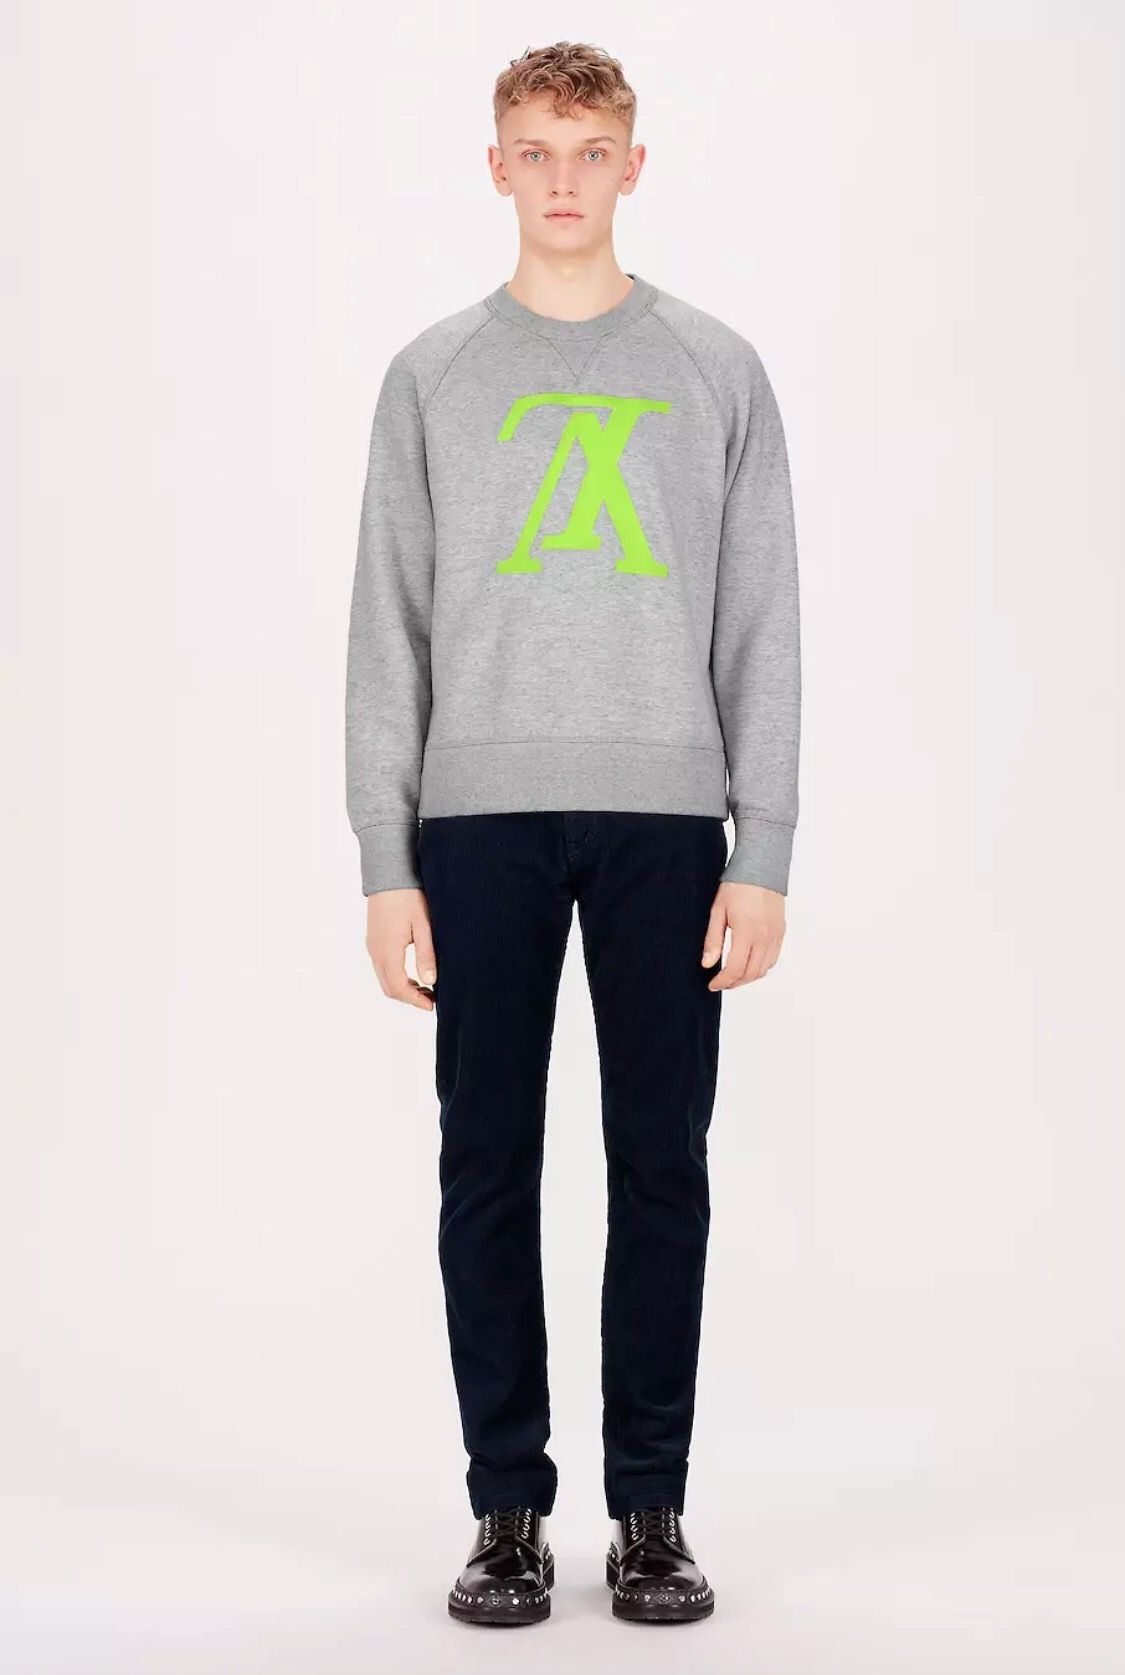 Louis Vuitton Men's Large Virgil Abloh Upsidedown Label Sweater